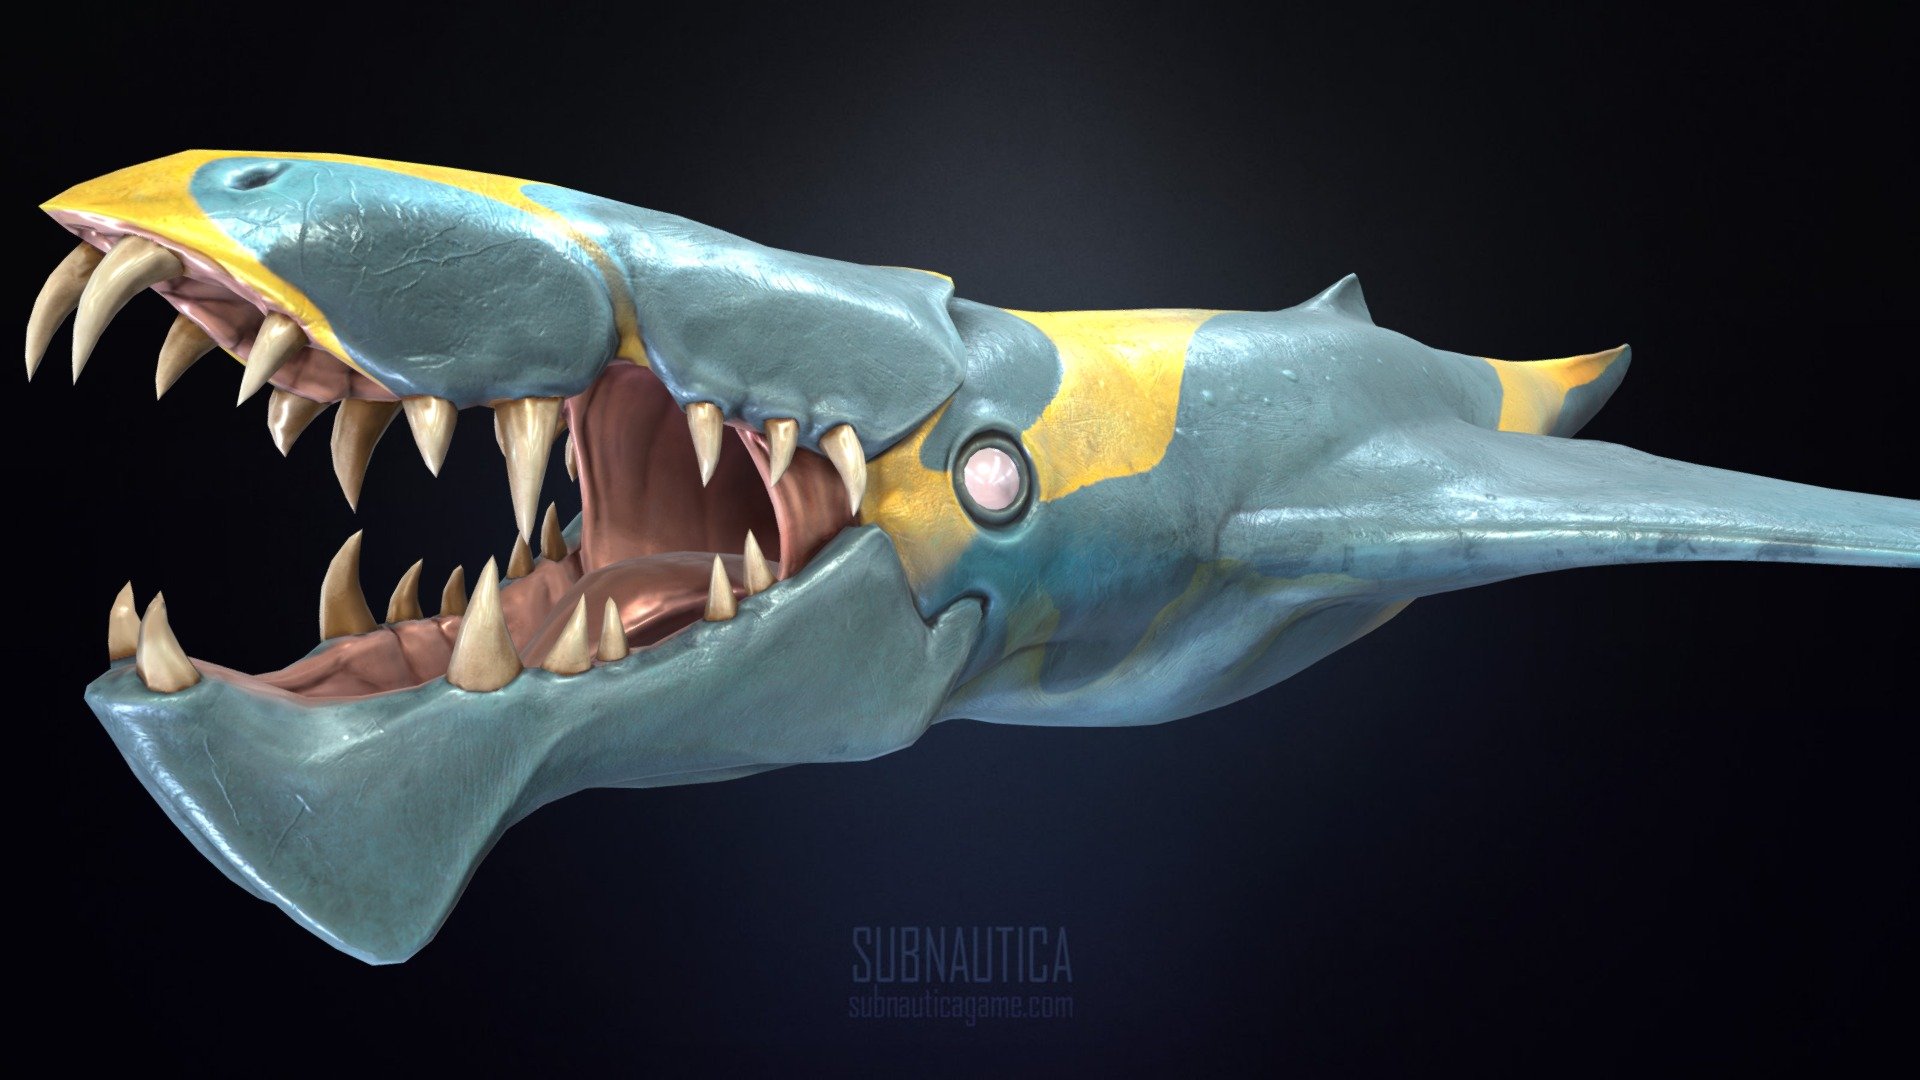 Brute_Shark final - 3D model by Fox3D (@fox3d) ef6369b - Sketchfab.